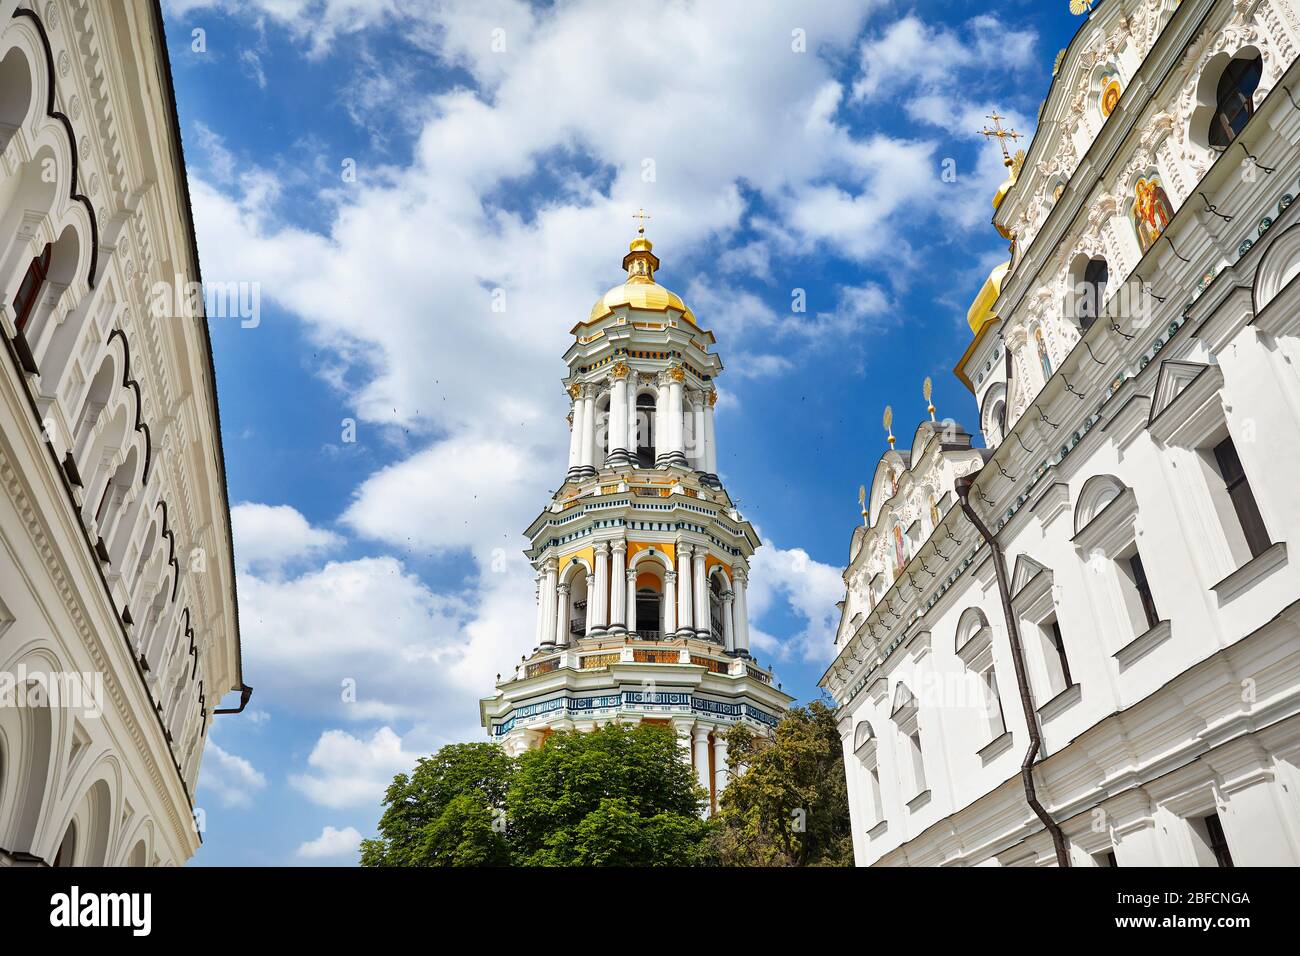 Vecchia Torre Campanaria di Kiev Pechersk Lavra. Vecchia architettura storica a Kiev, Ucraina Foto Stock